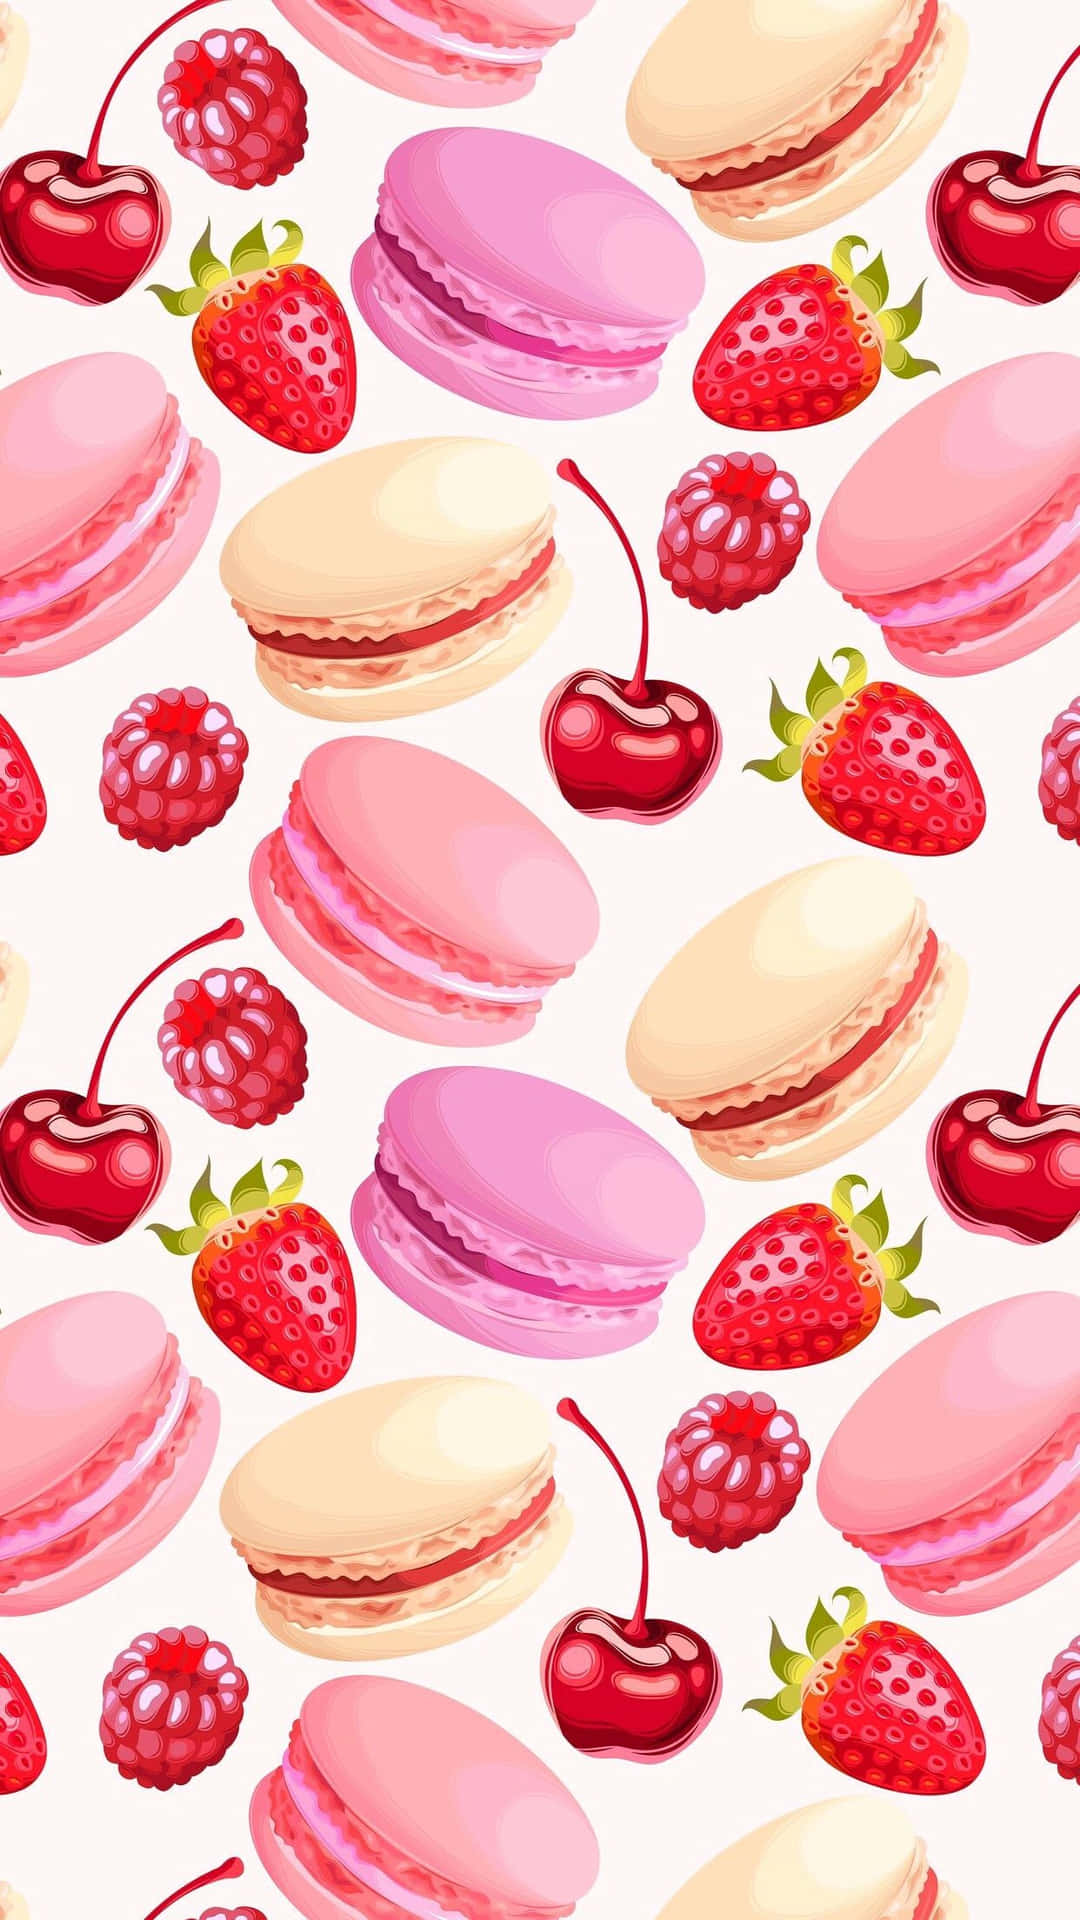 Strawberry Cherry Macaron Girly Cute Picture